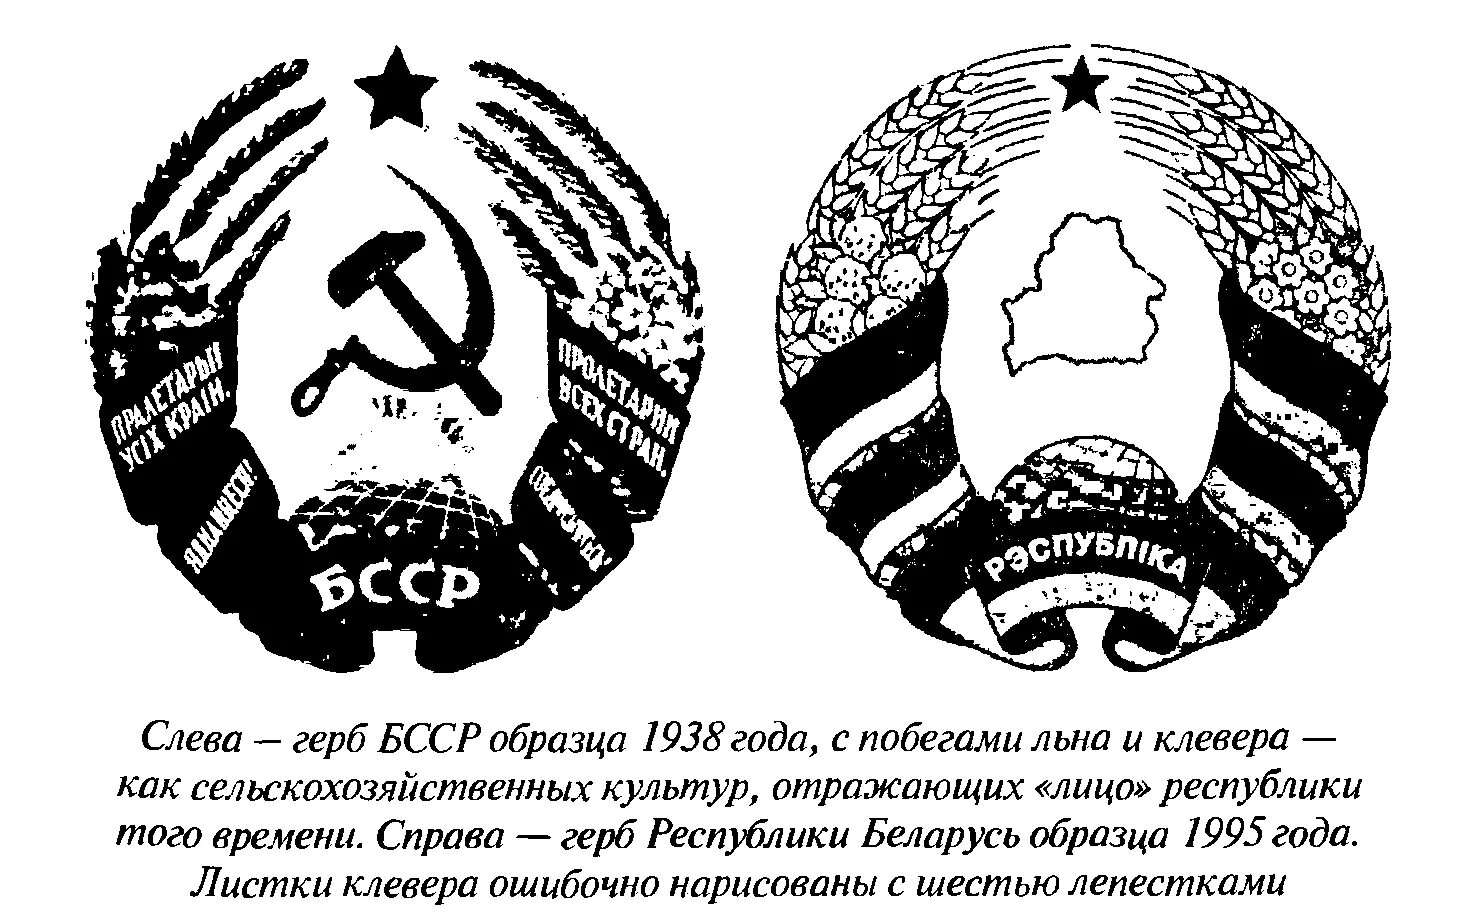 Emblem of the Republic of Belarus #5